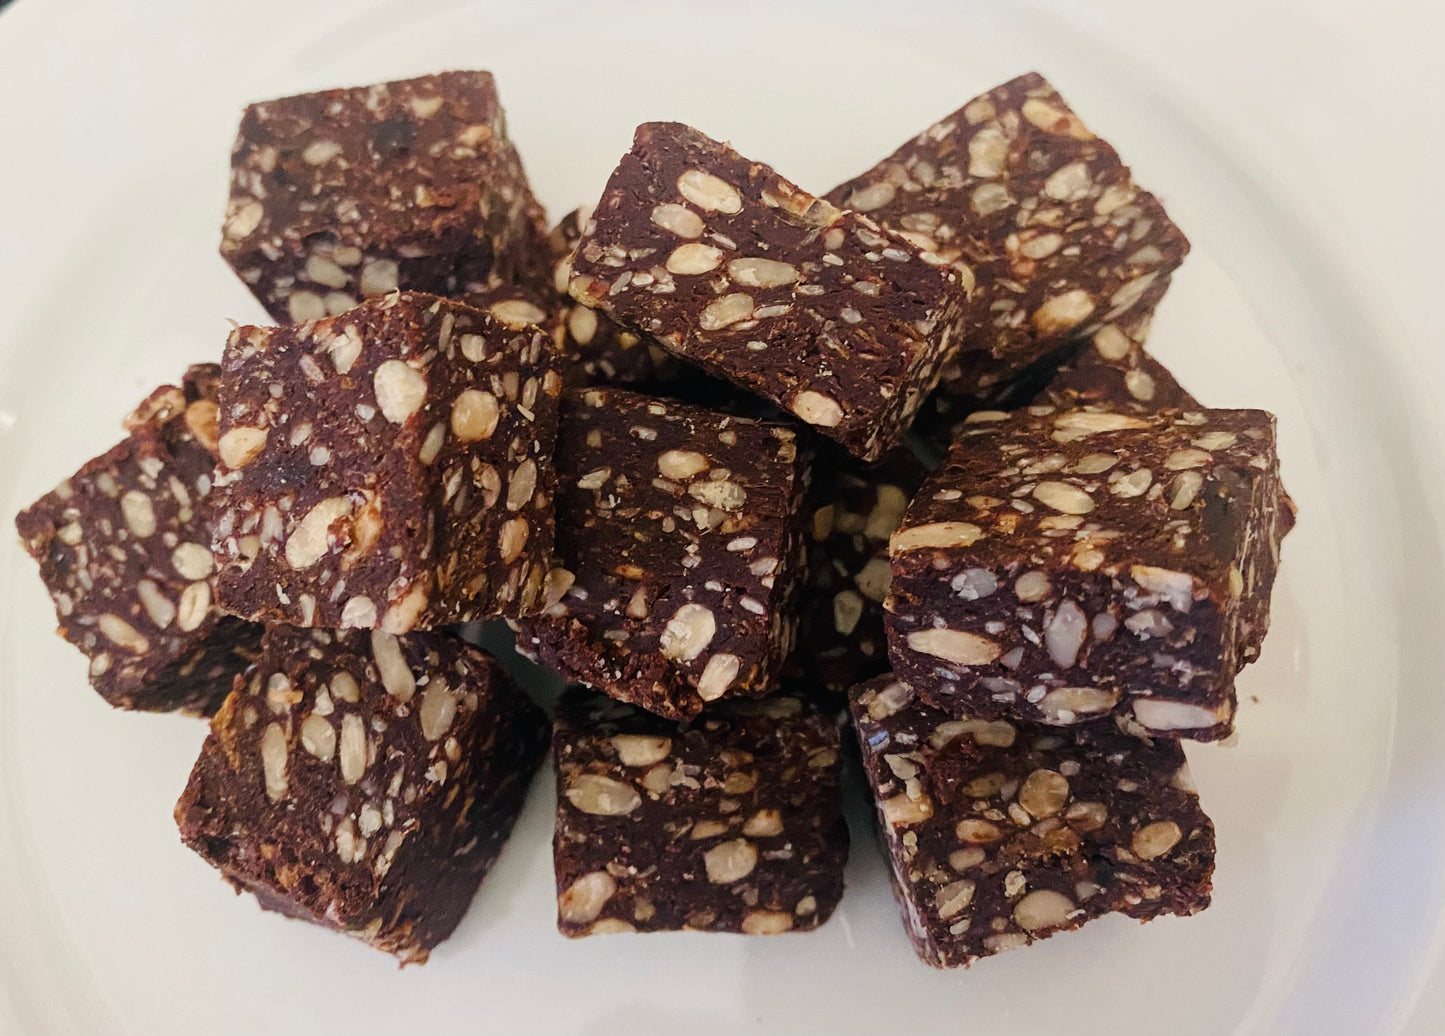 Organic Energy Cubes - Cacao/Goji  - Healthy Snack - 4 oz